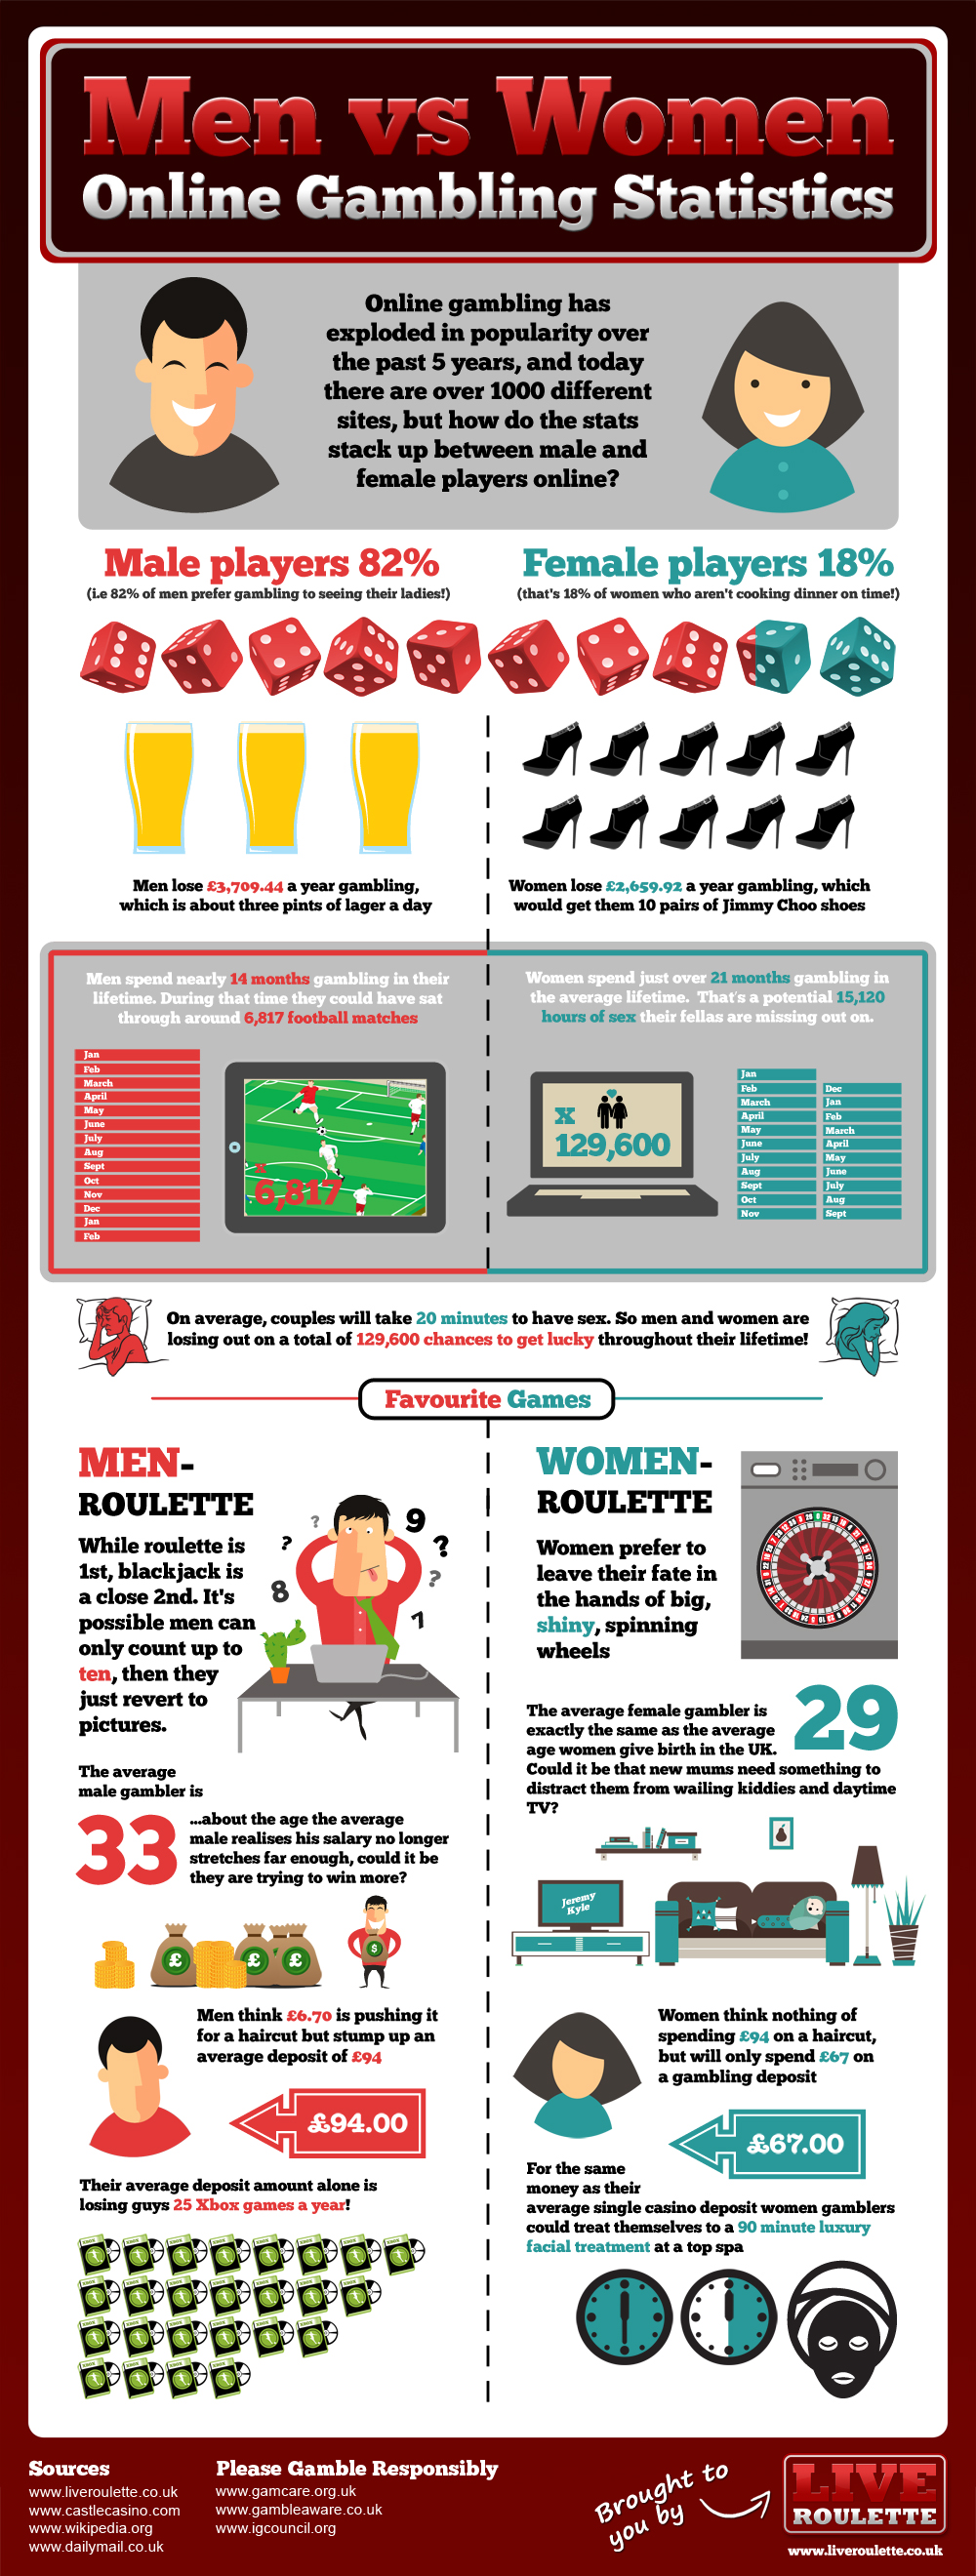 Men vs Women Online Gambling Statistics